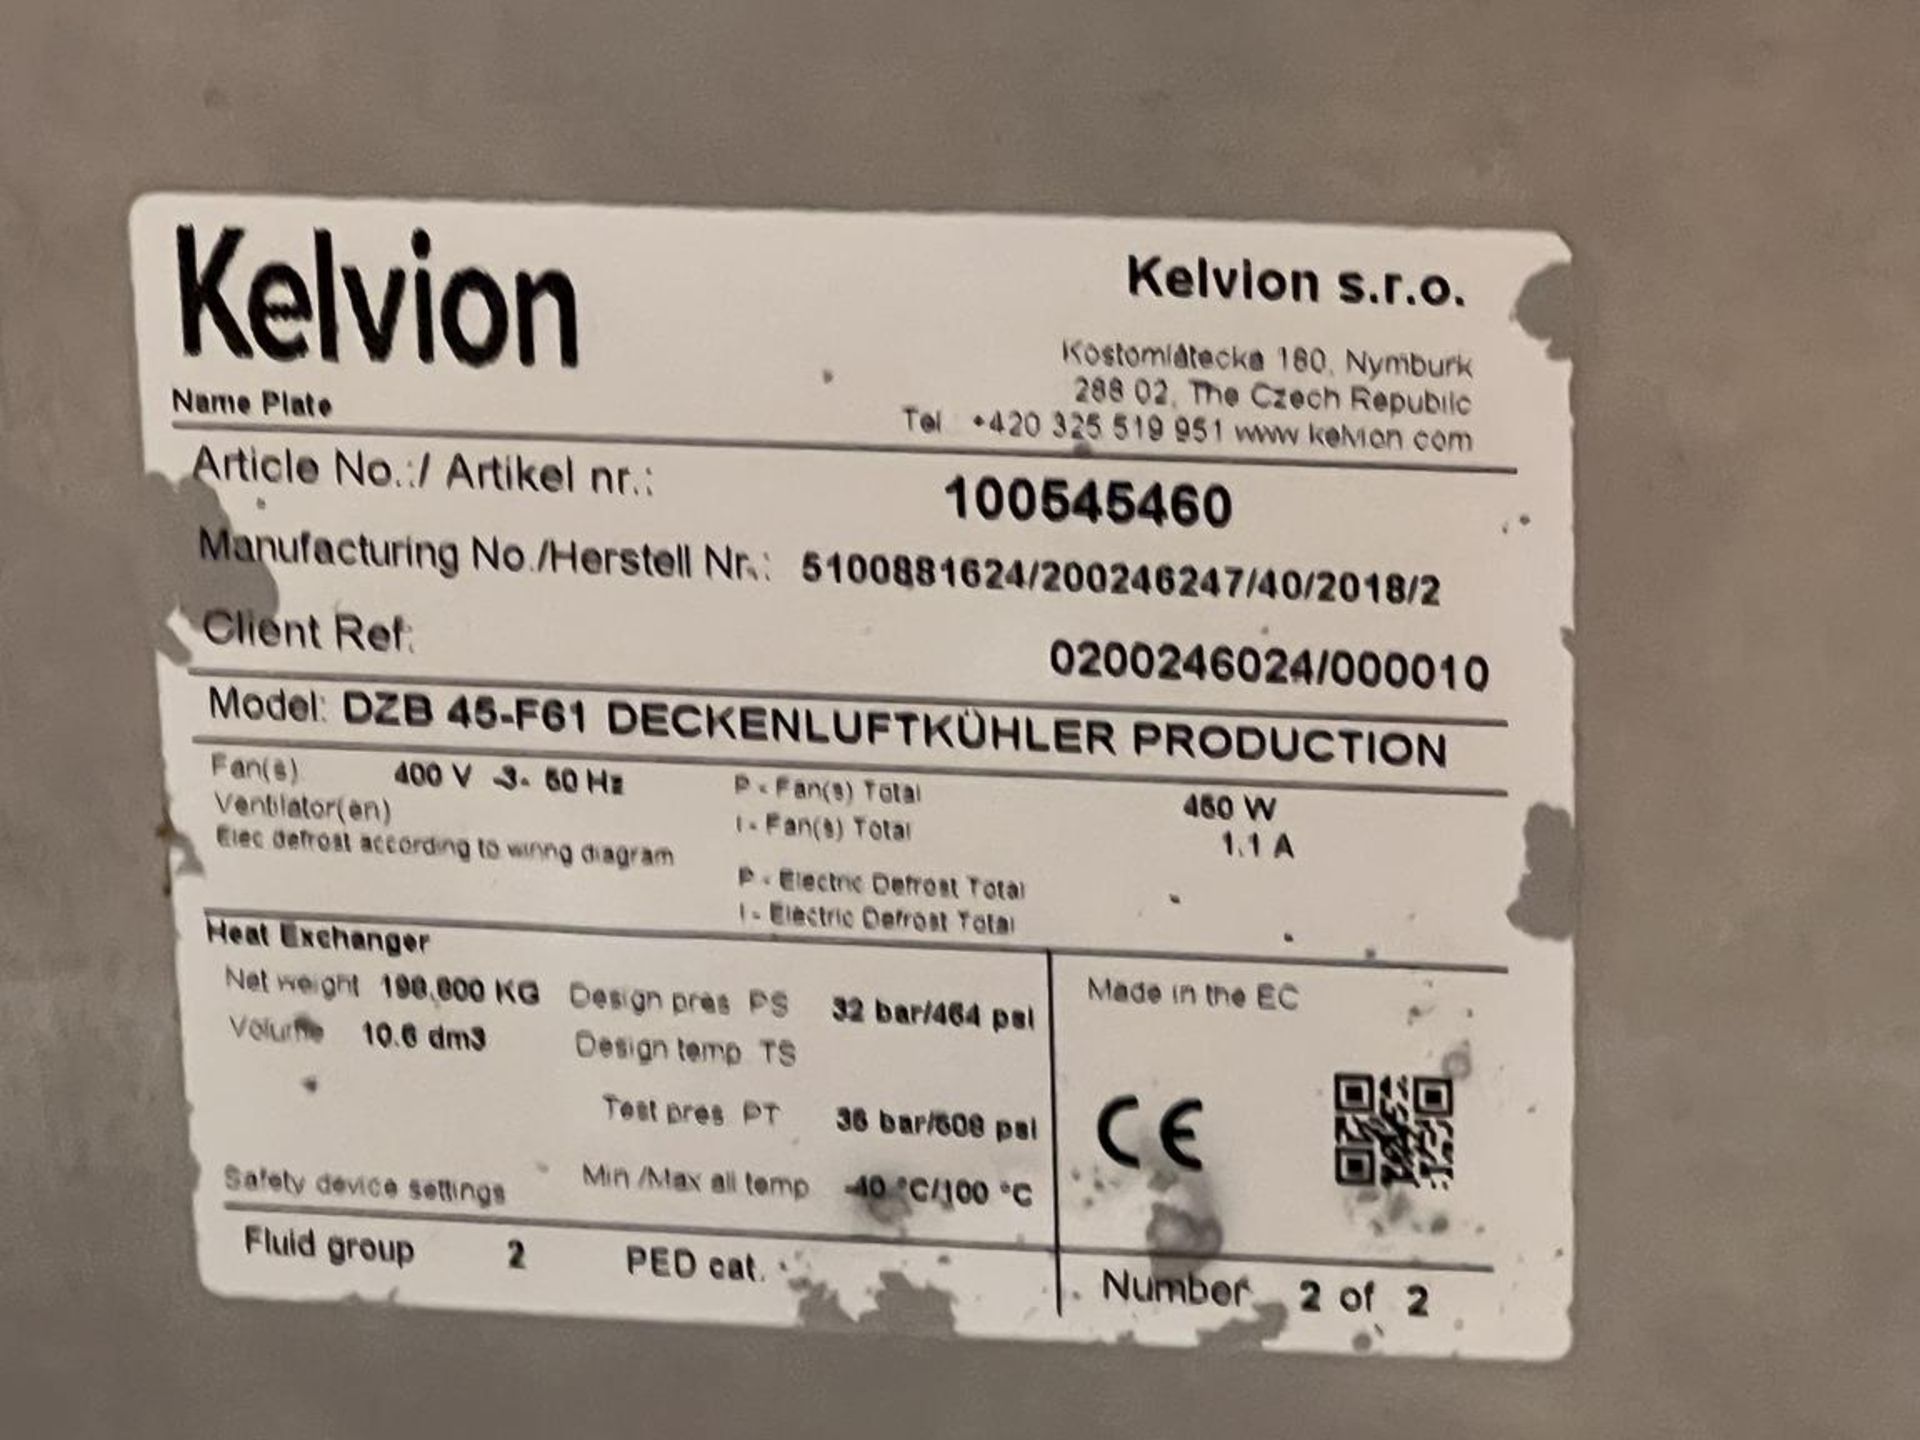 2x (no.) Kelvion, DZB45 F61 Deckenluftkodler single fan condenser units, Serial No. 5100881624/ - Image 6 of 7